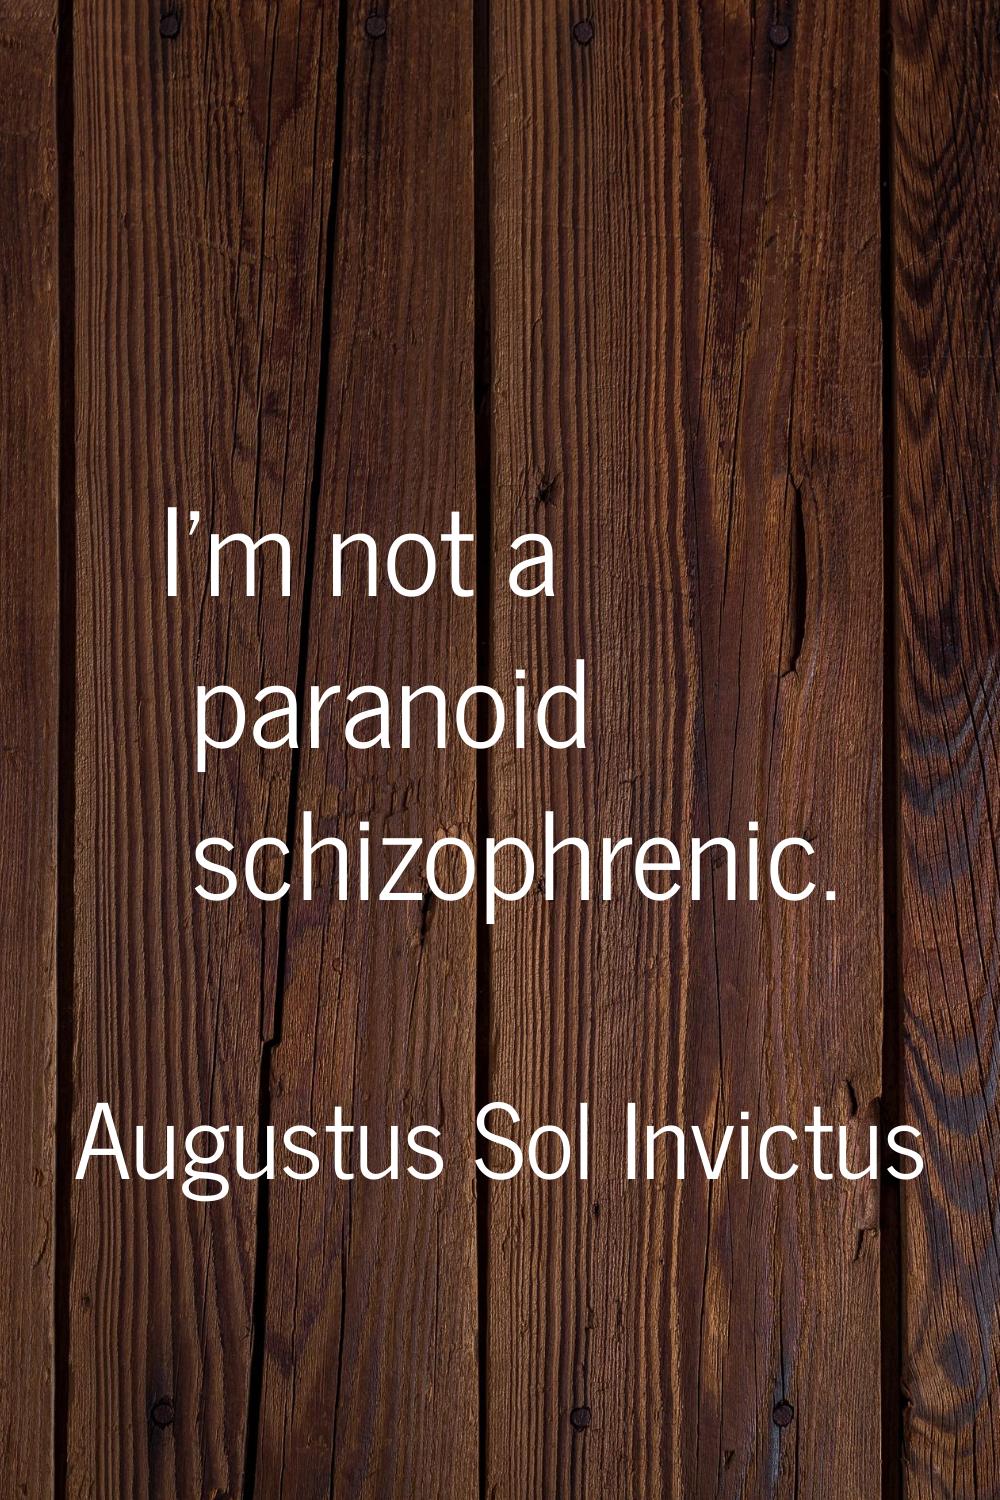 I'm not a paranoid schizophrenic.